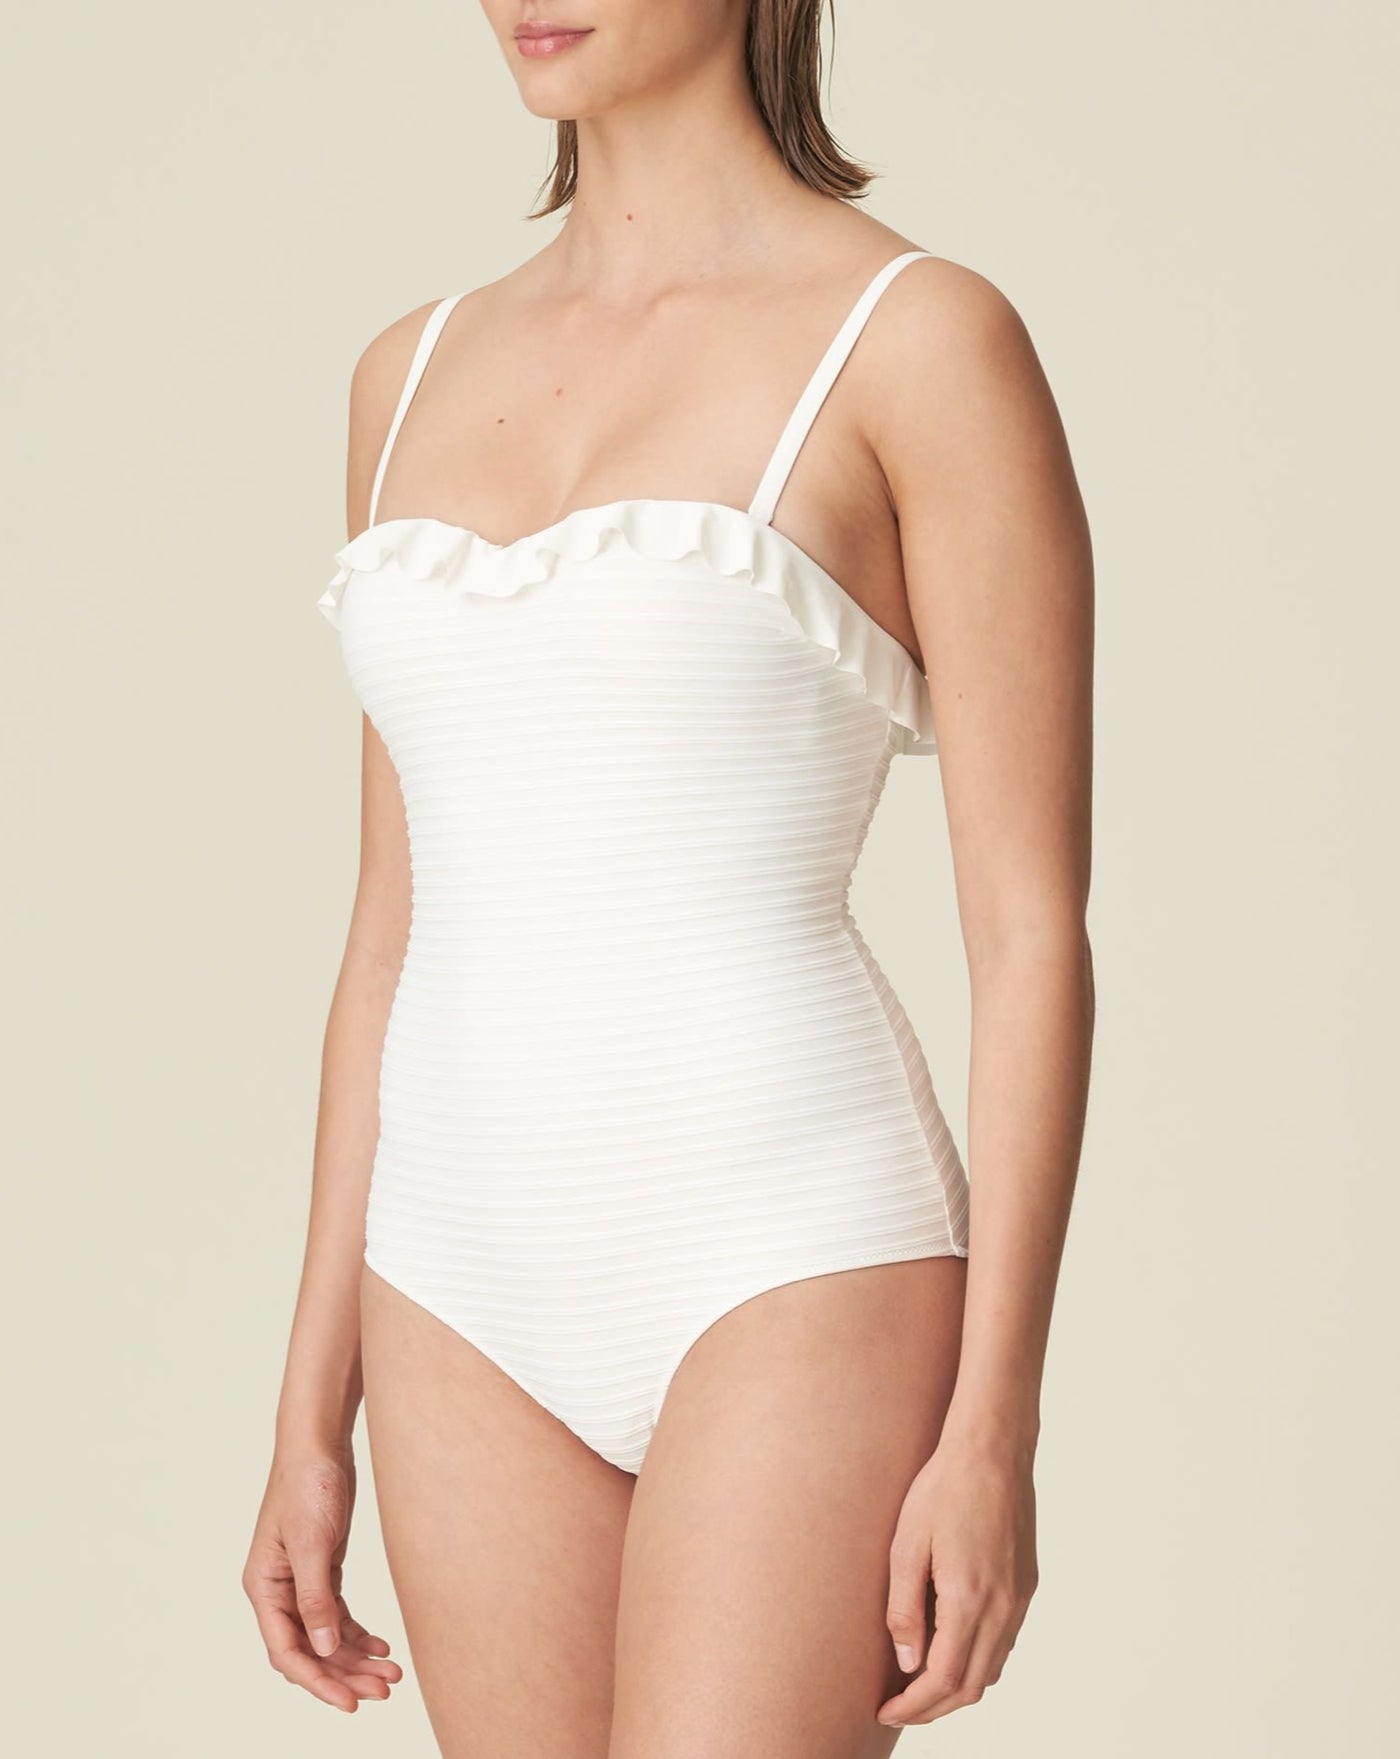 Celine Strapless Swimsuit: Small